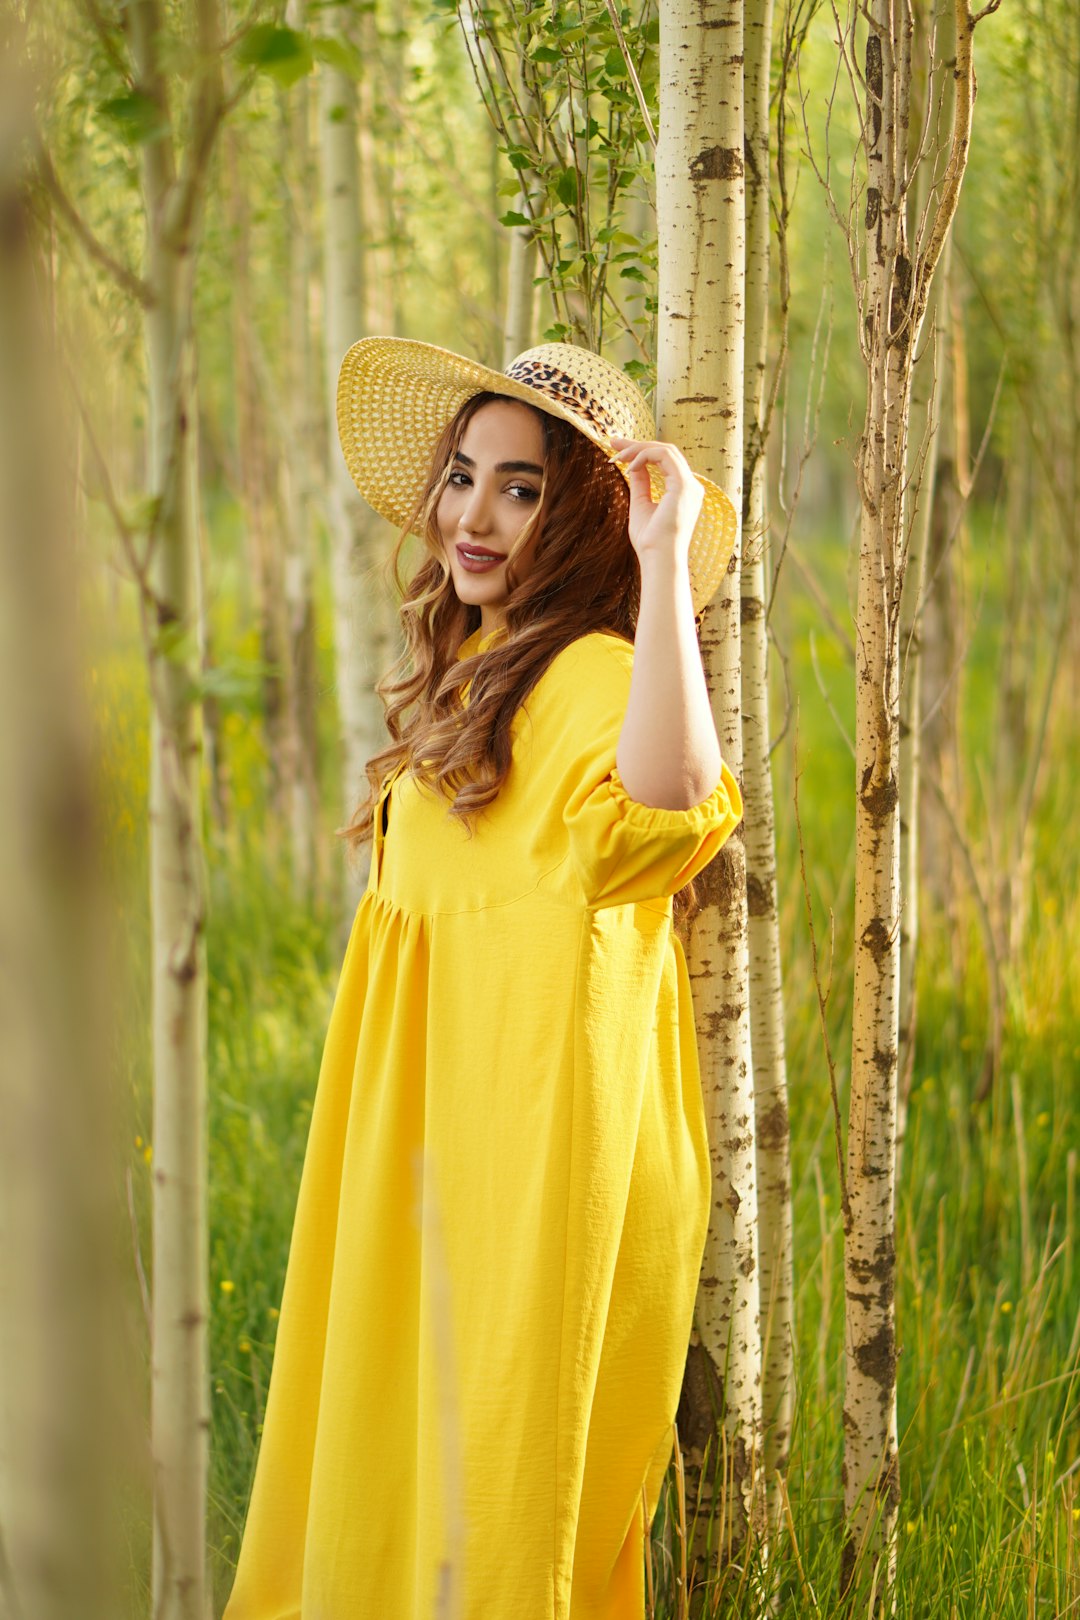 woman in yellow dress wearing brown straw hat